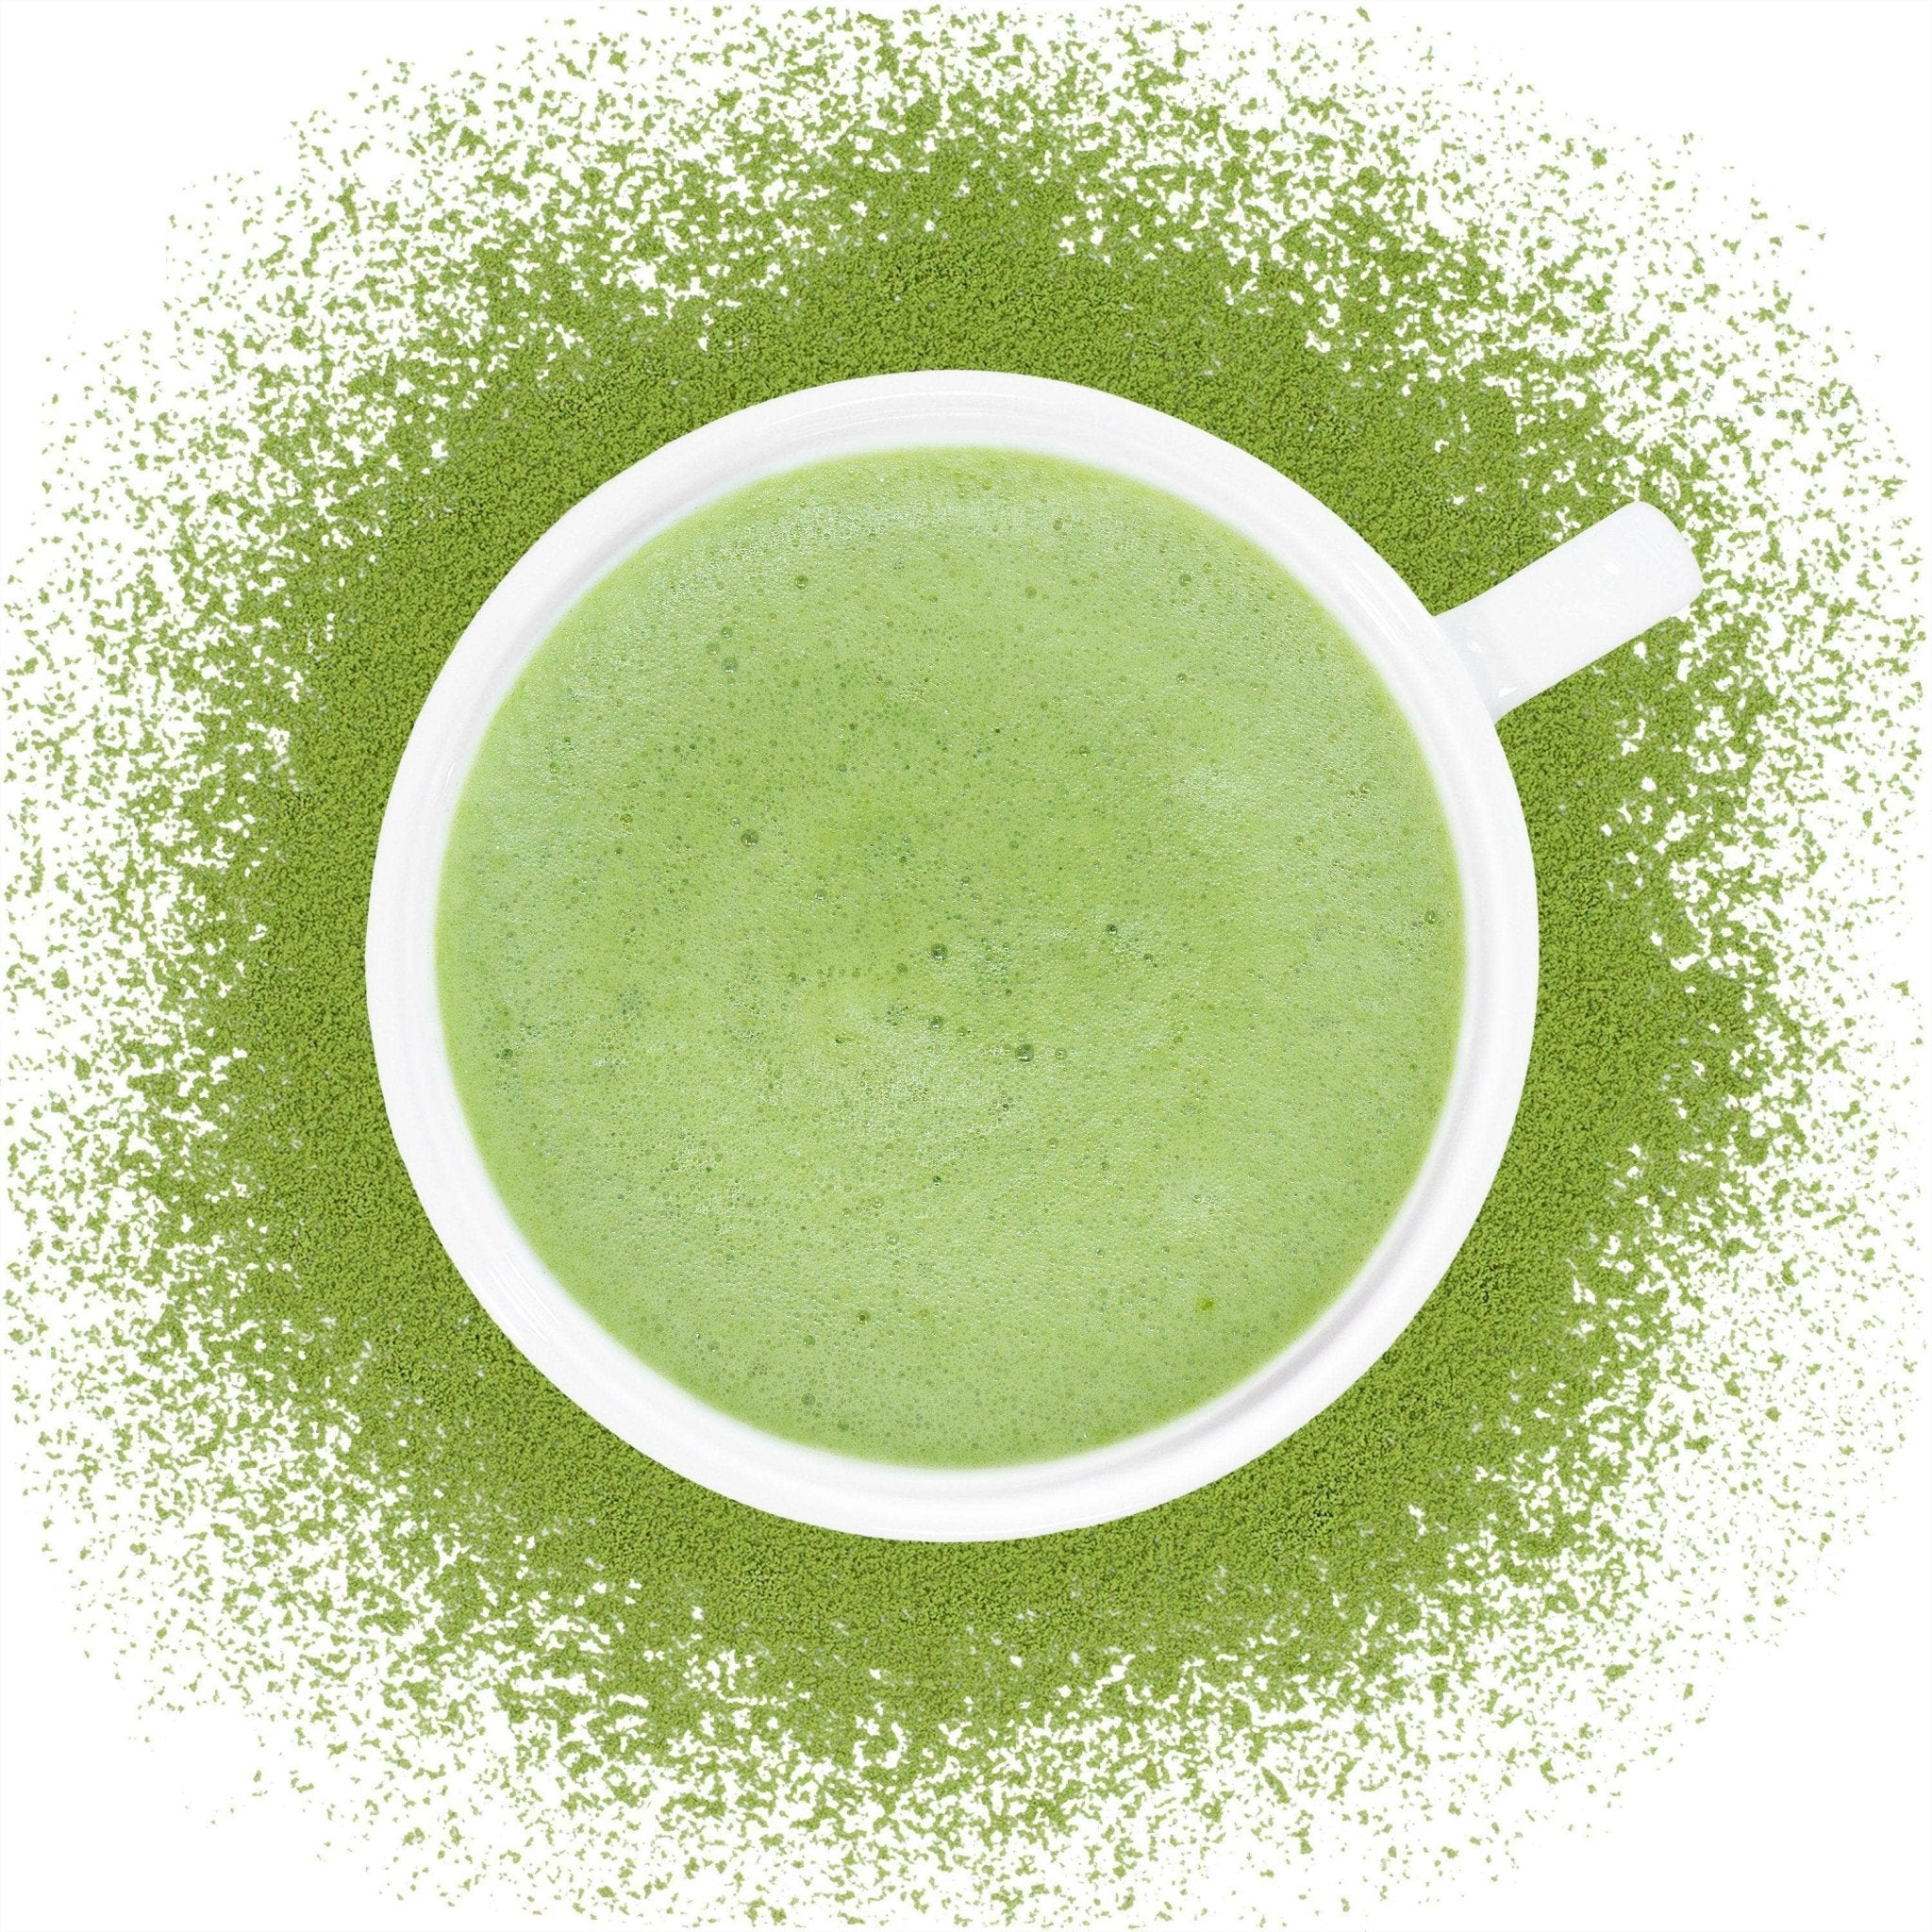 Clearspring Organic Japanese Matcha Green Tea Powder - Ceremonial